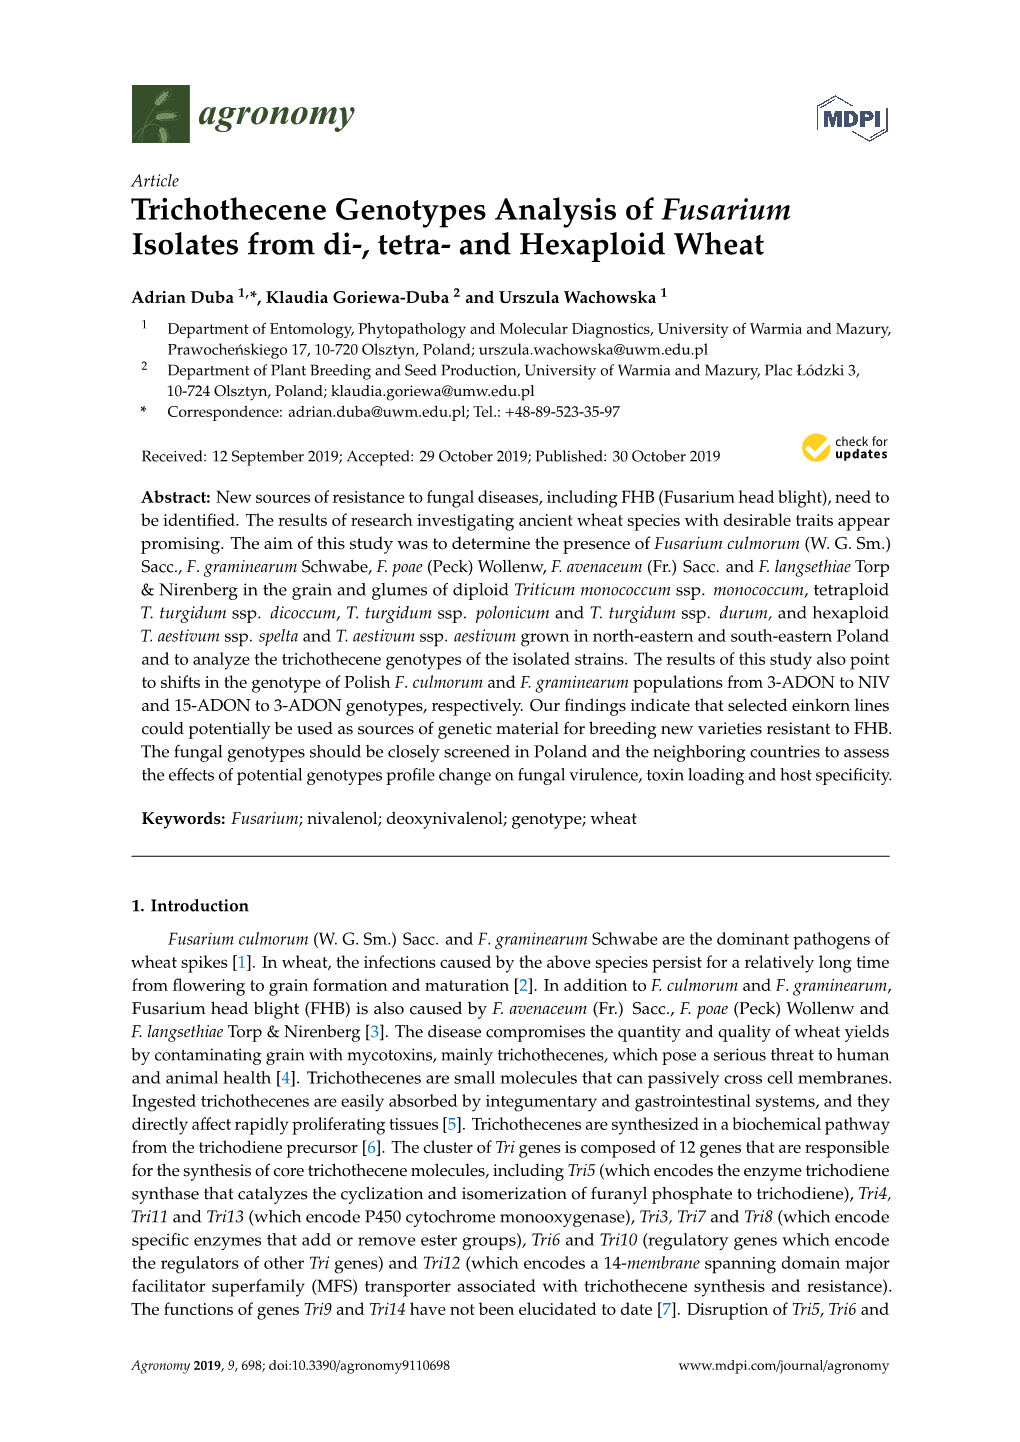 Trichothecene Genotypes Analysis of Fusarium Isolates from Di-, Tetra- and Hexaploid Wheat